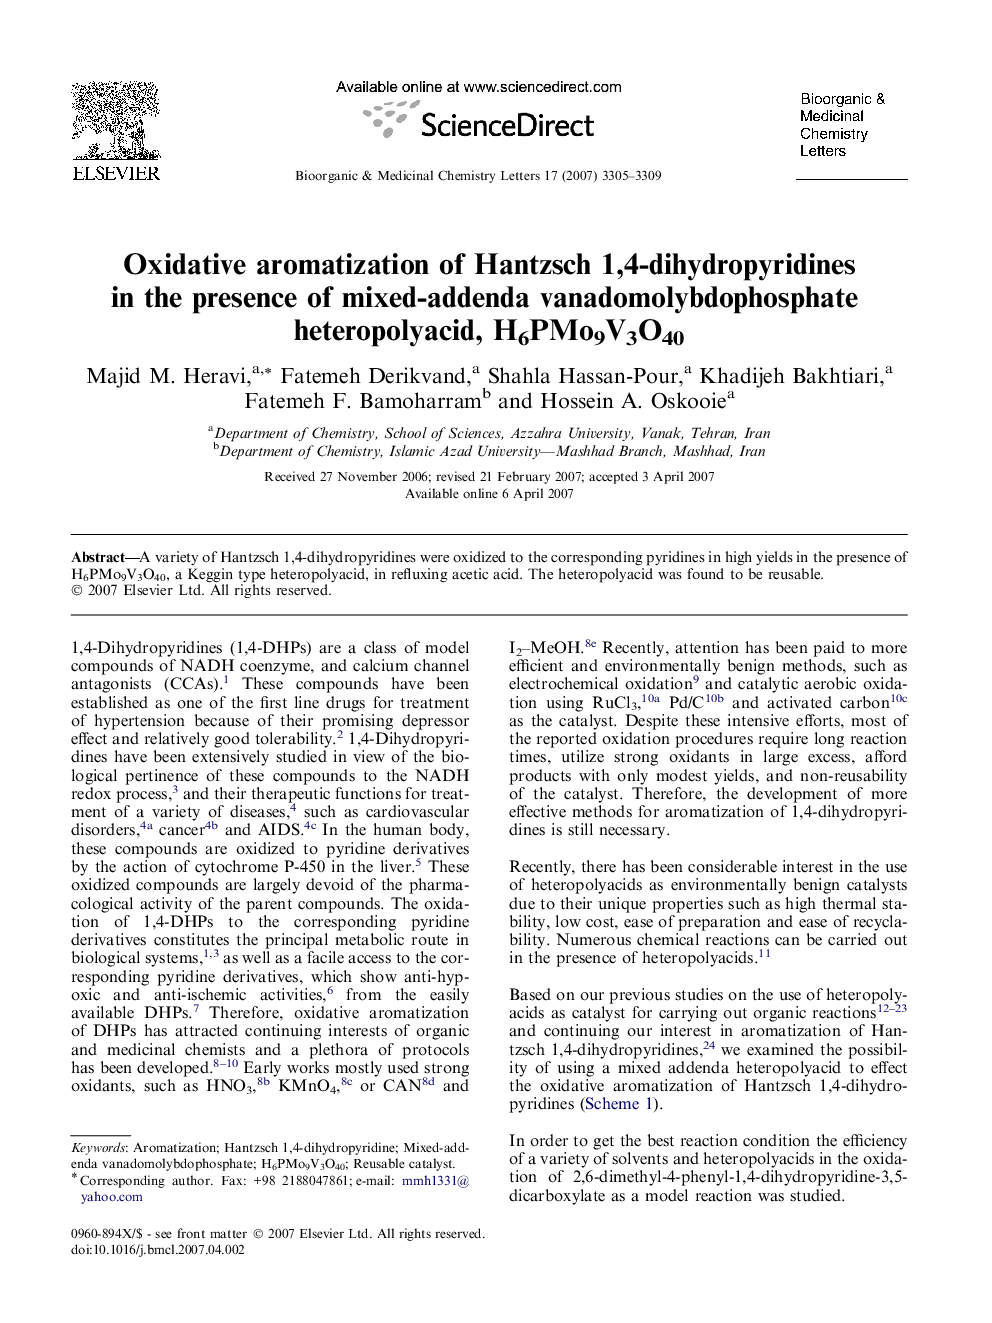 Oxidative aromatization of Hantzsch 1,4-dihydropyridines in the presence of mixed-addenda vanadomolybdophosphate heteropolyacid, H6PMo9V3O40